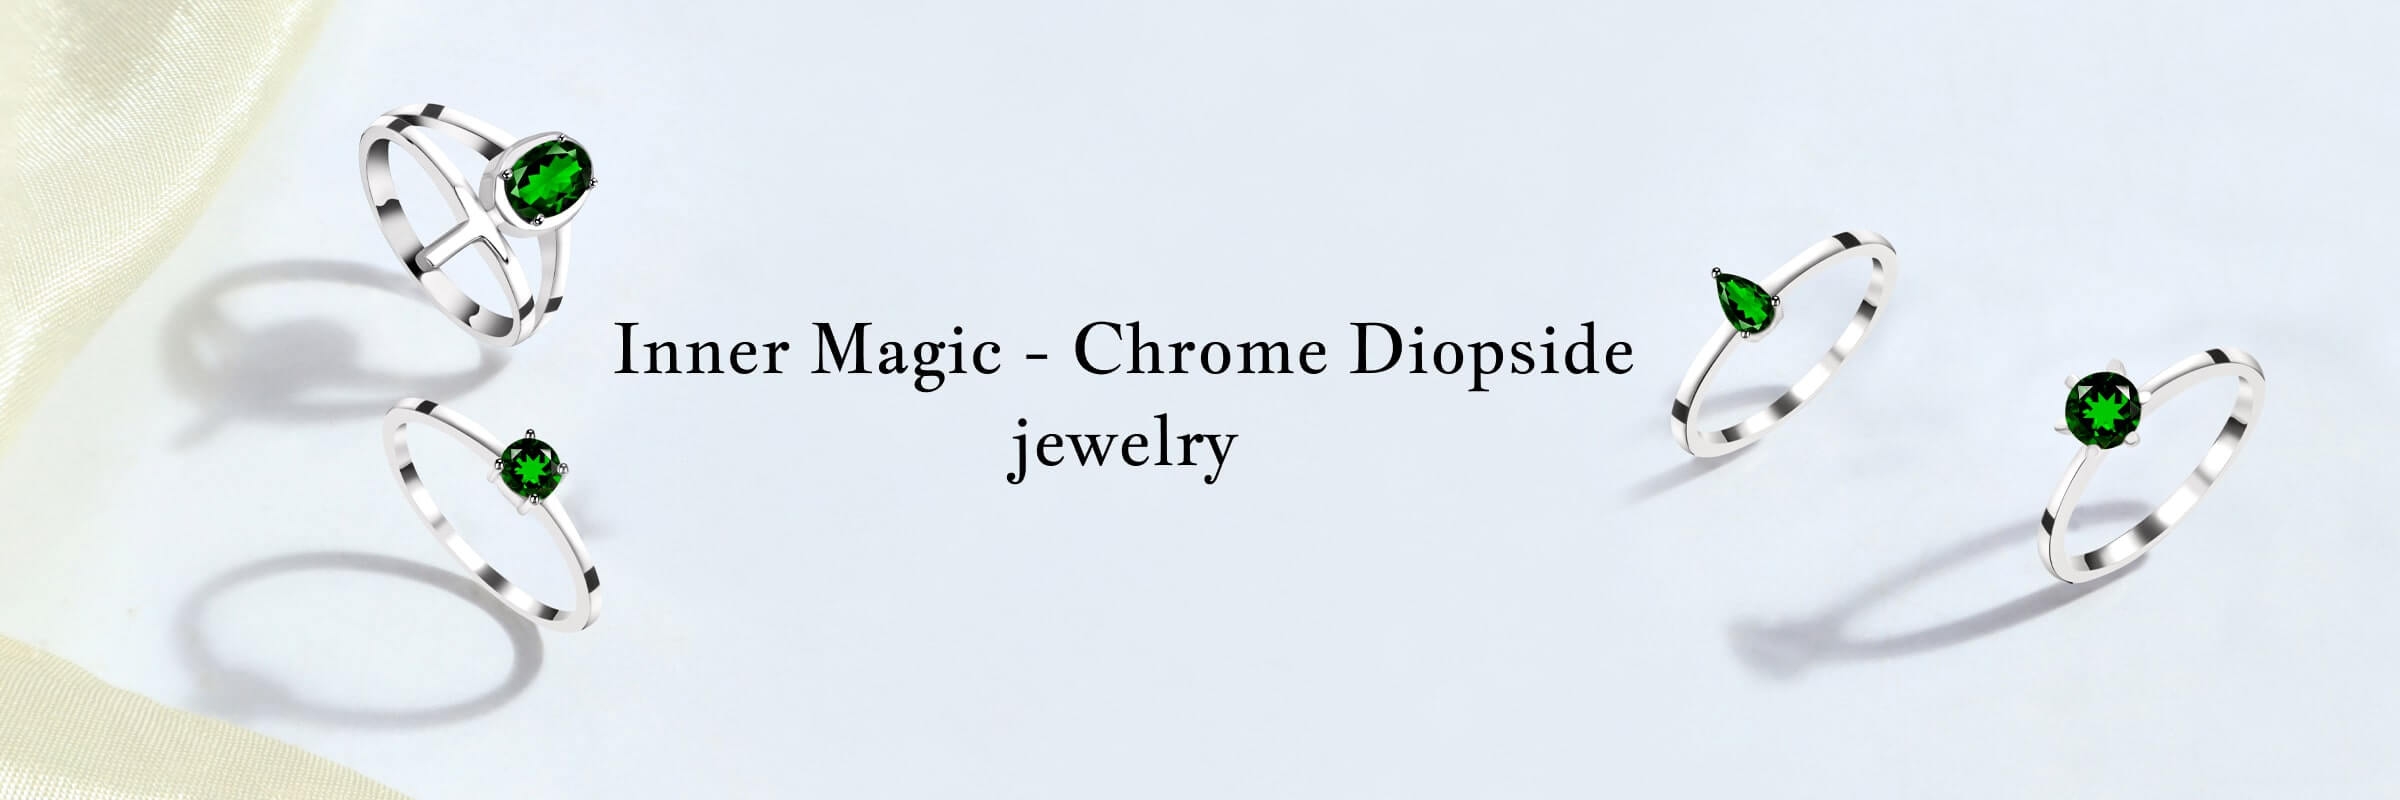 Chrome Diopside Jewelry